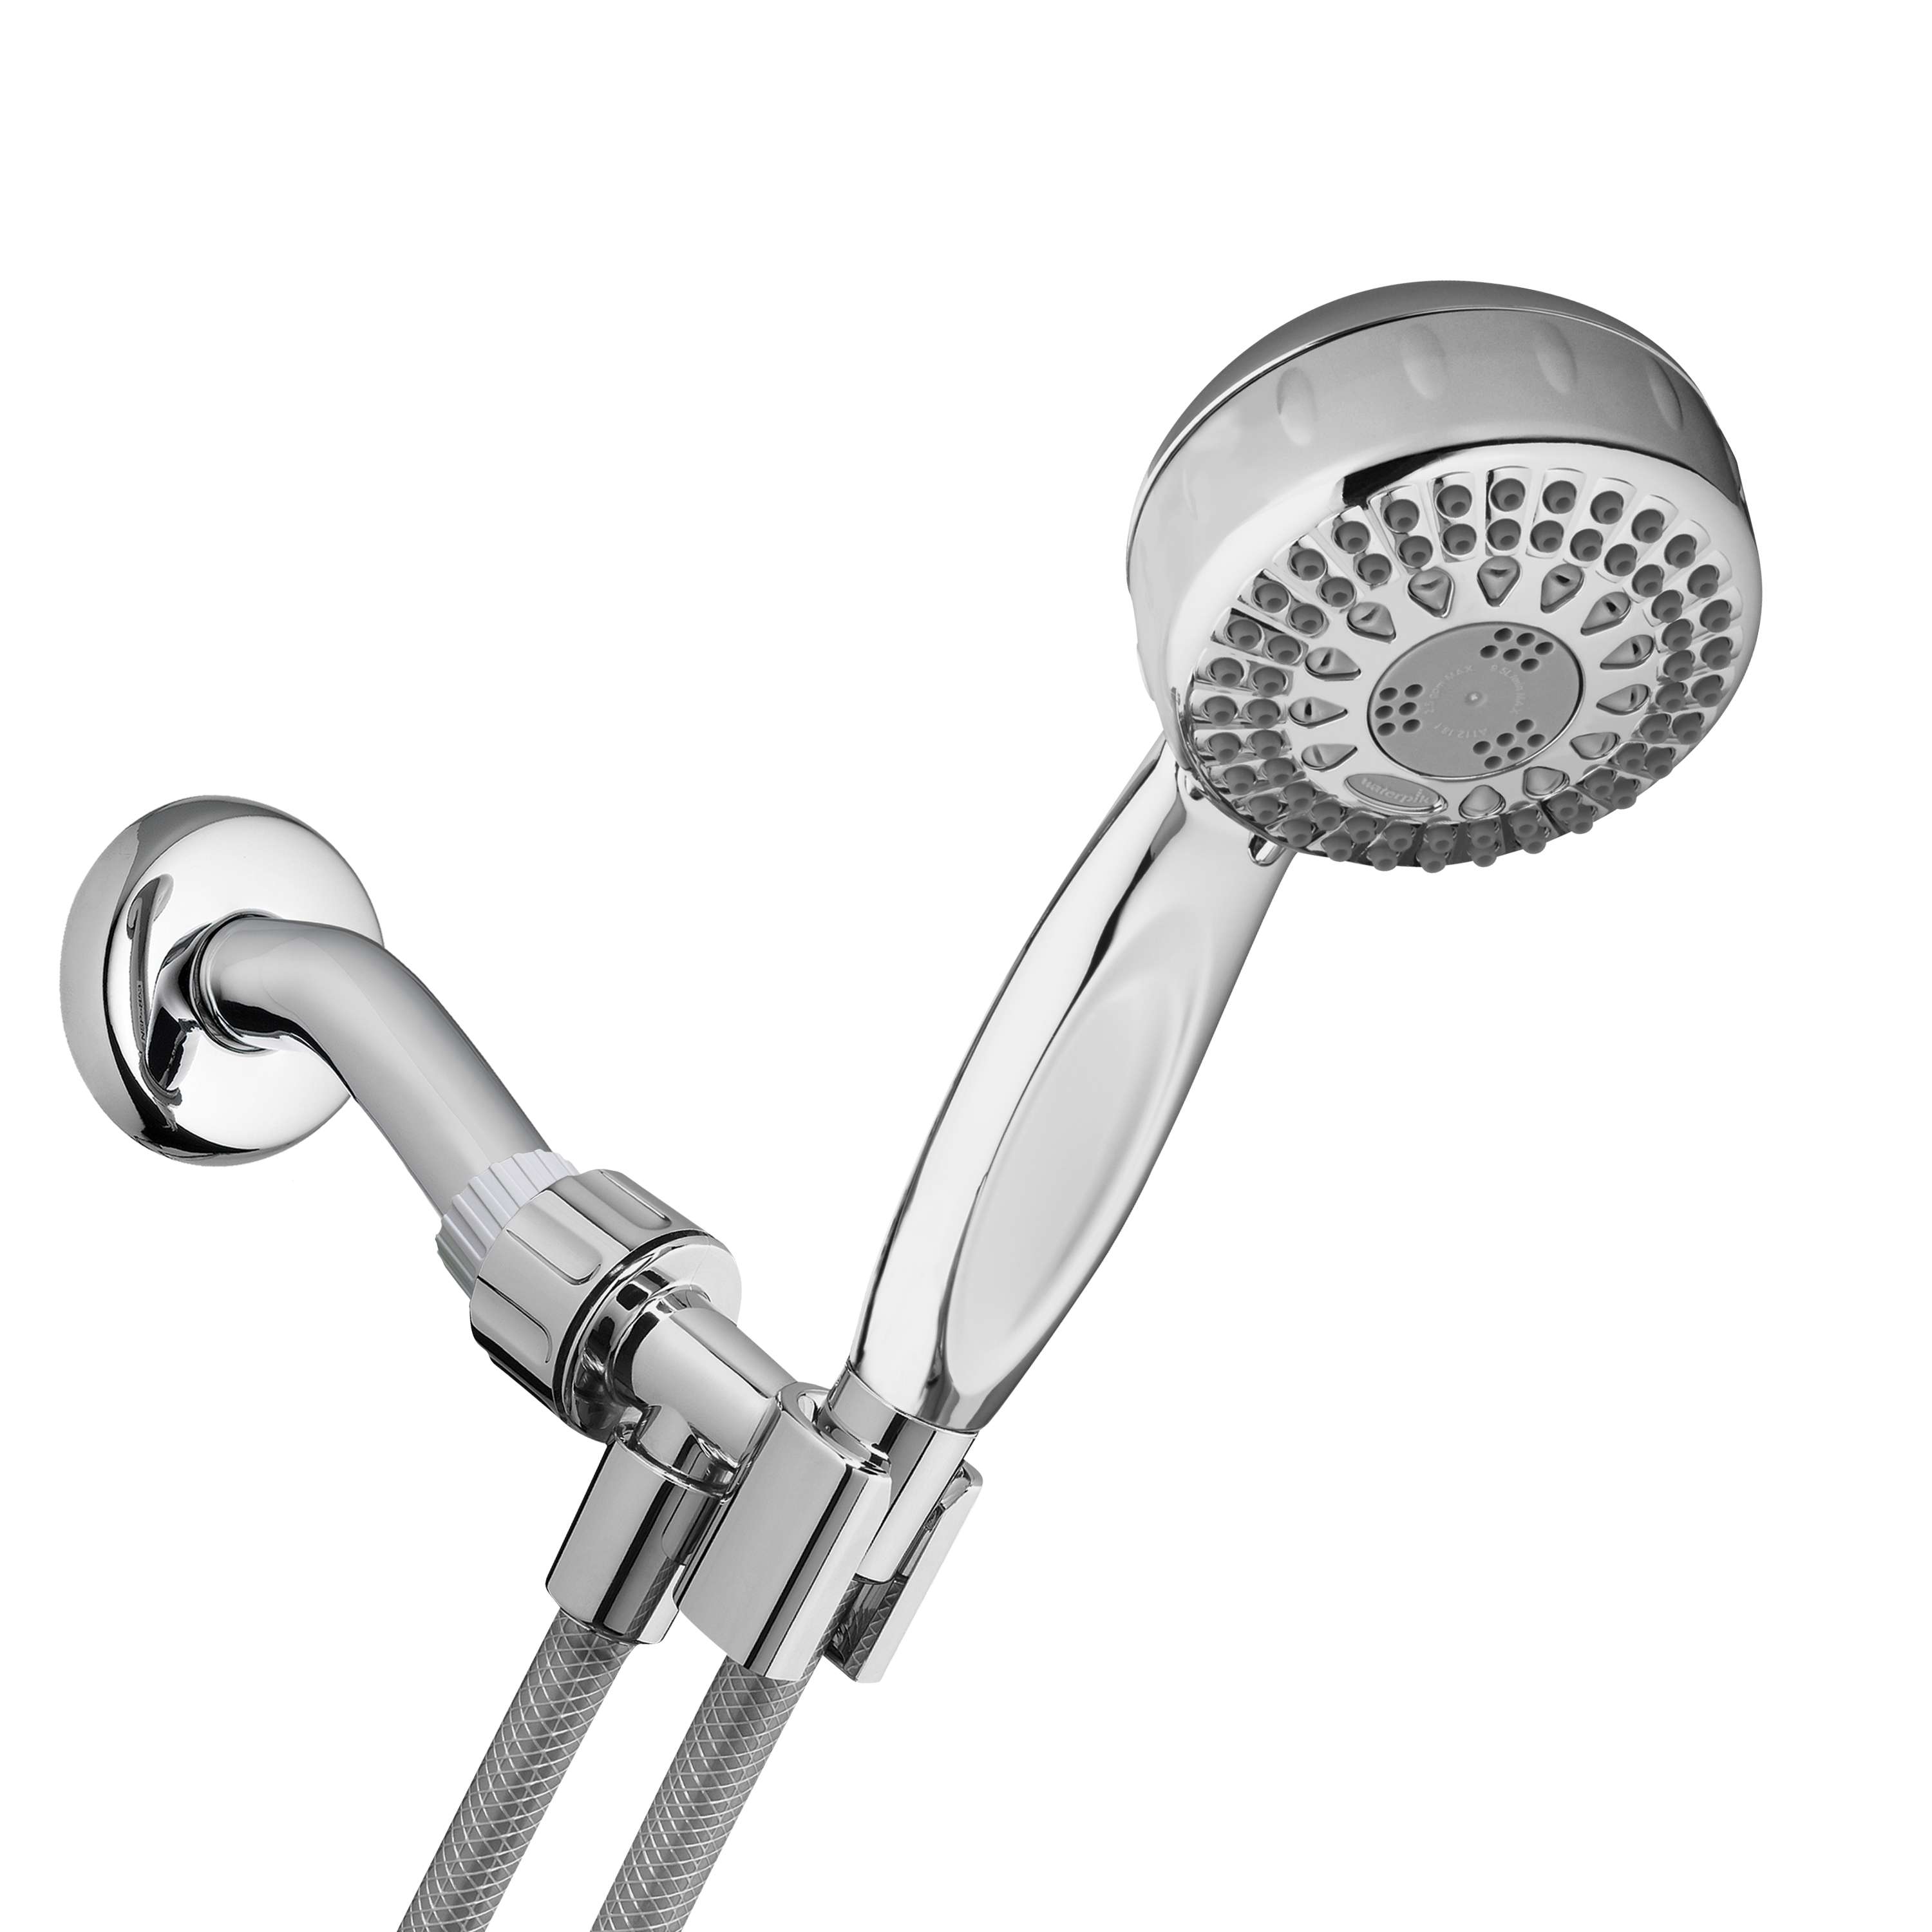 Waterpik 5-Mode PowerSpray+ Hand Held Shower Head, Chrome TRS-553 - image 1 of 6